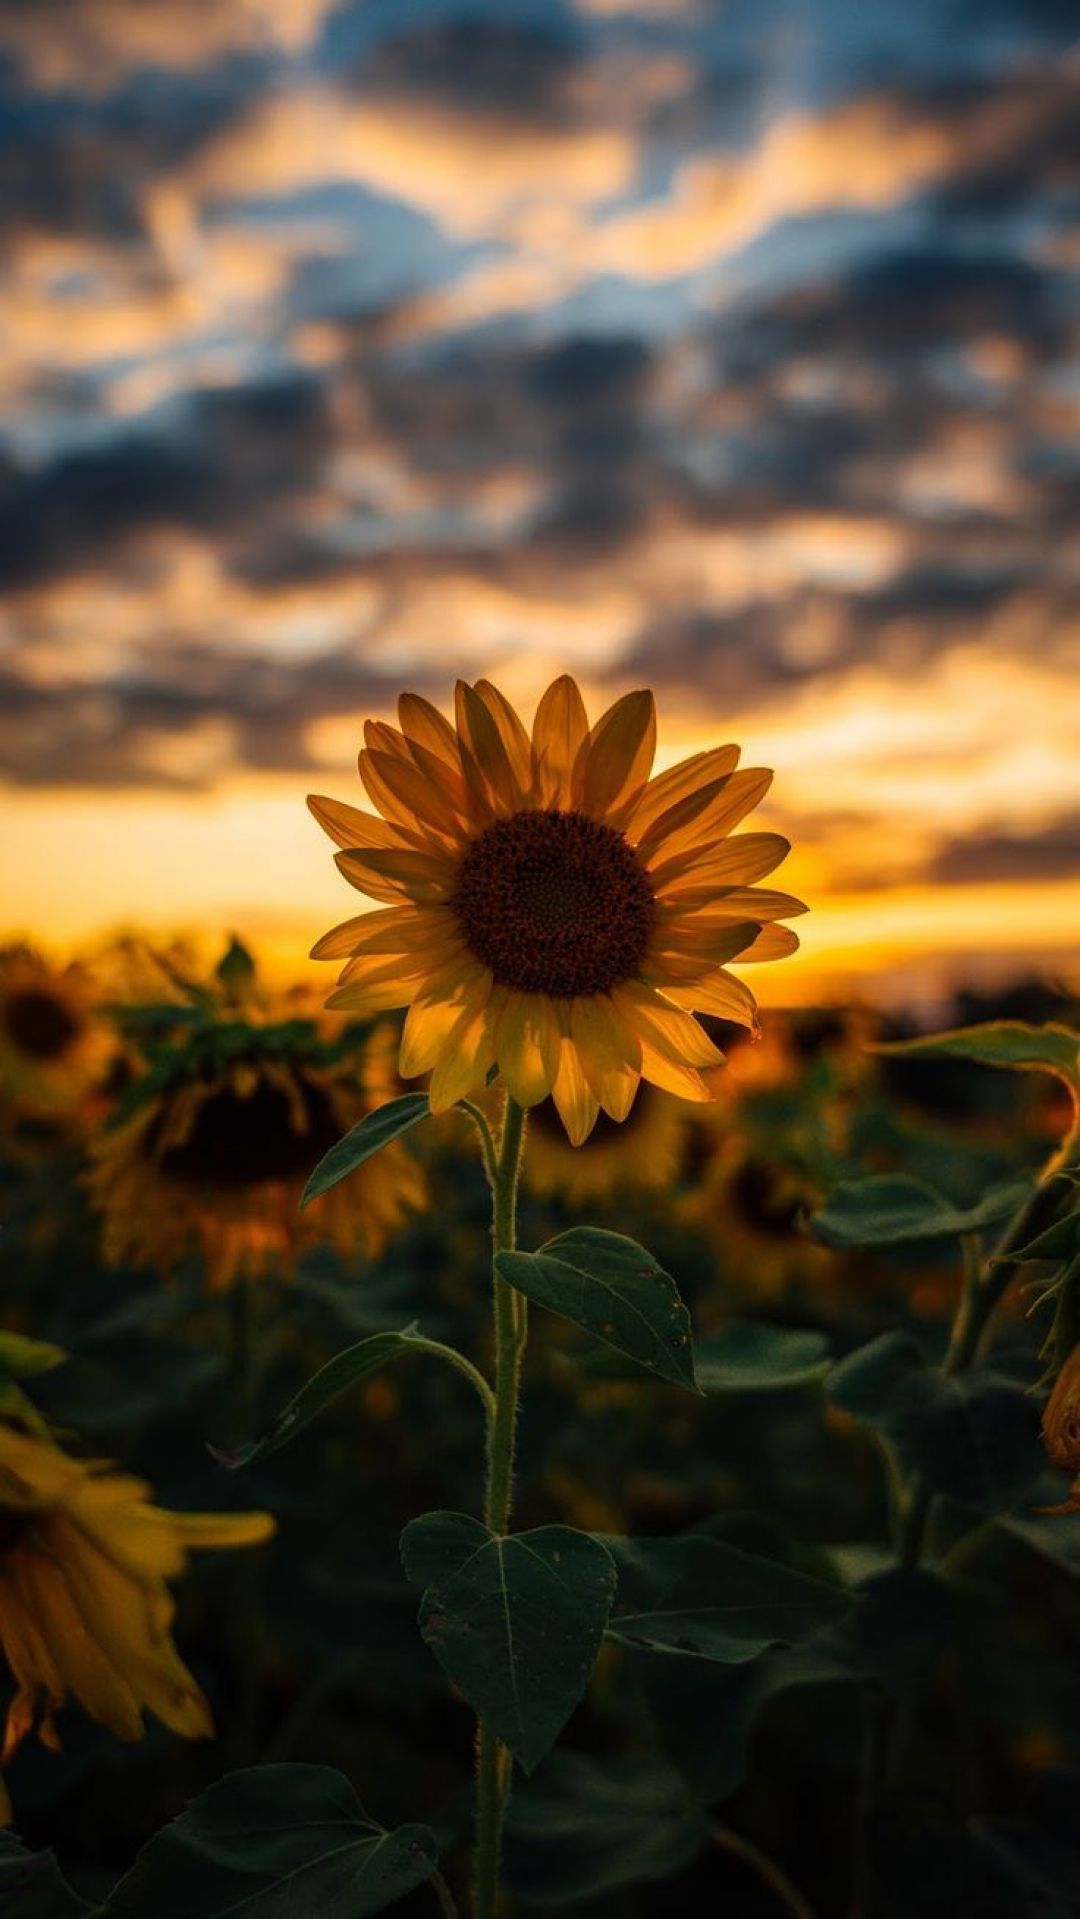 Aesthetic HD iPhone Wallpaper Flowers. Sunflower iphone